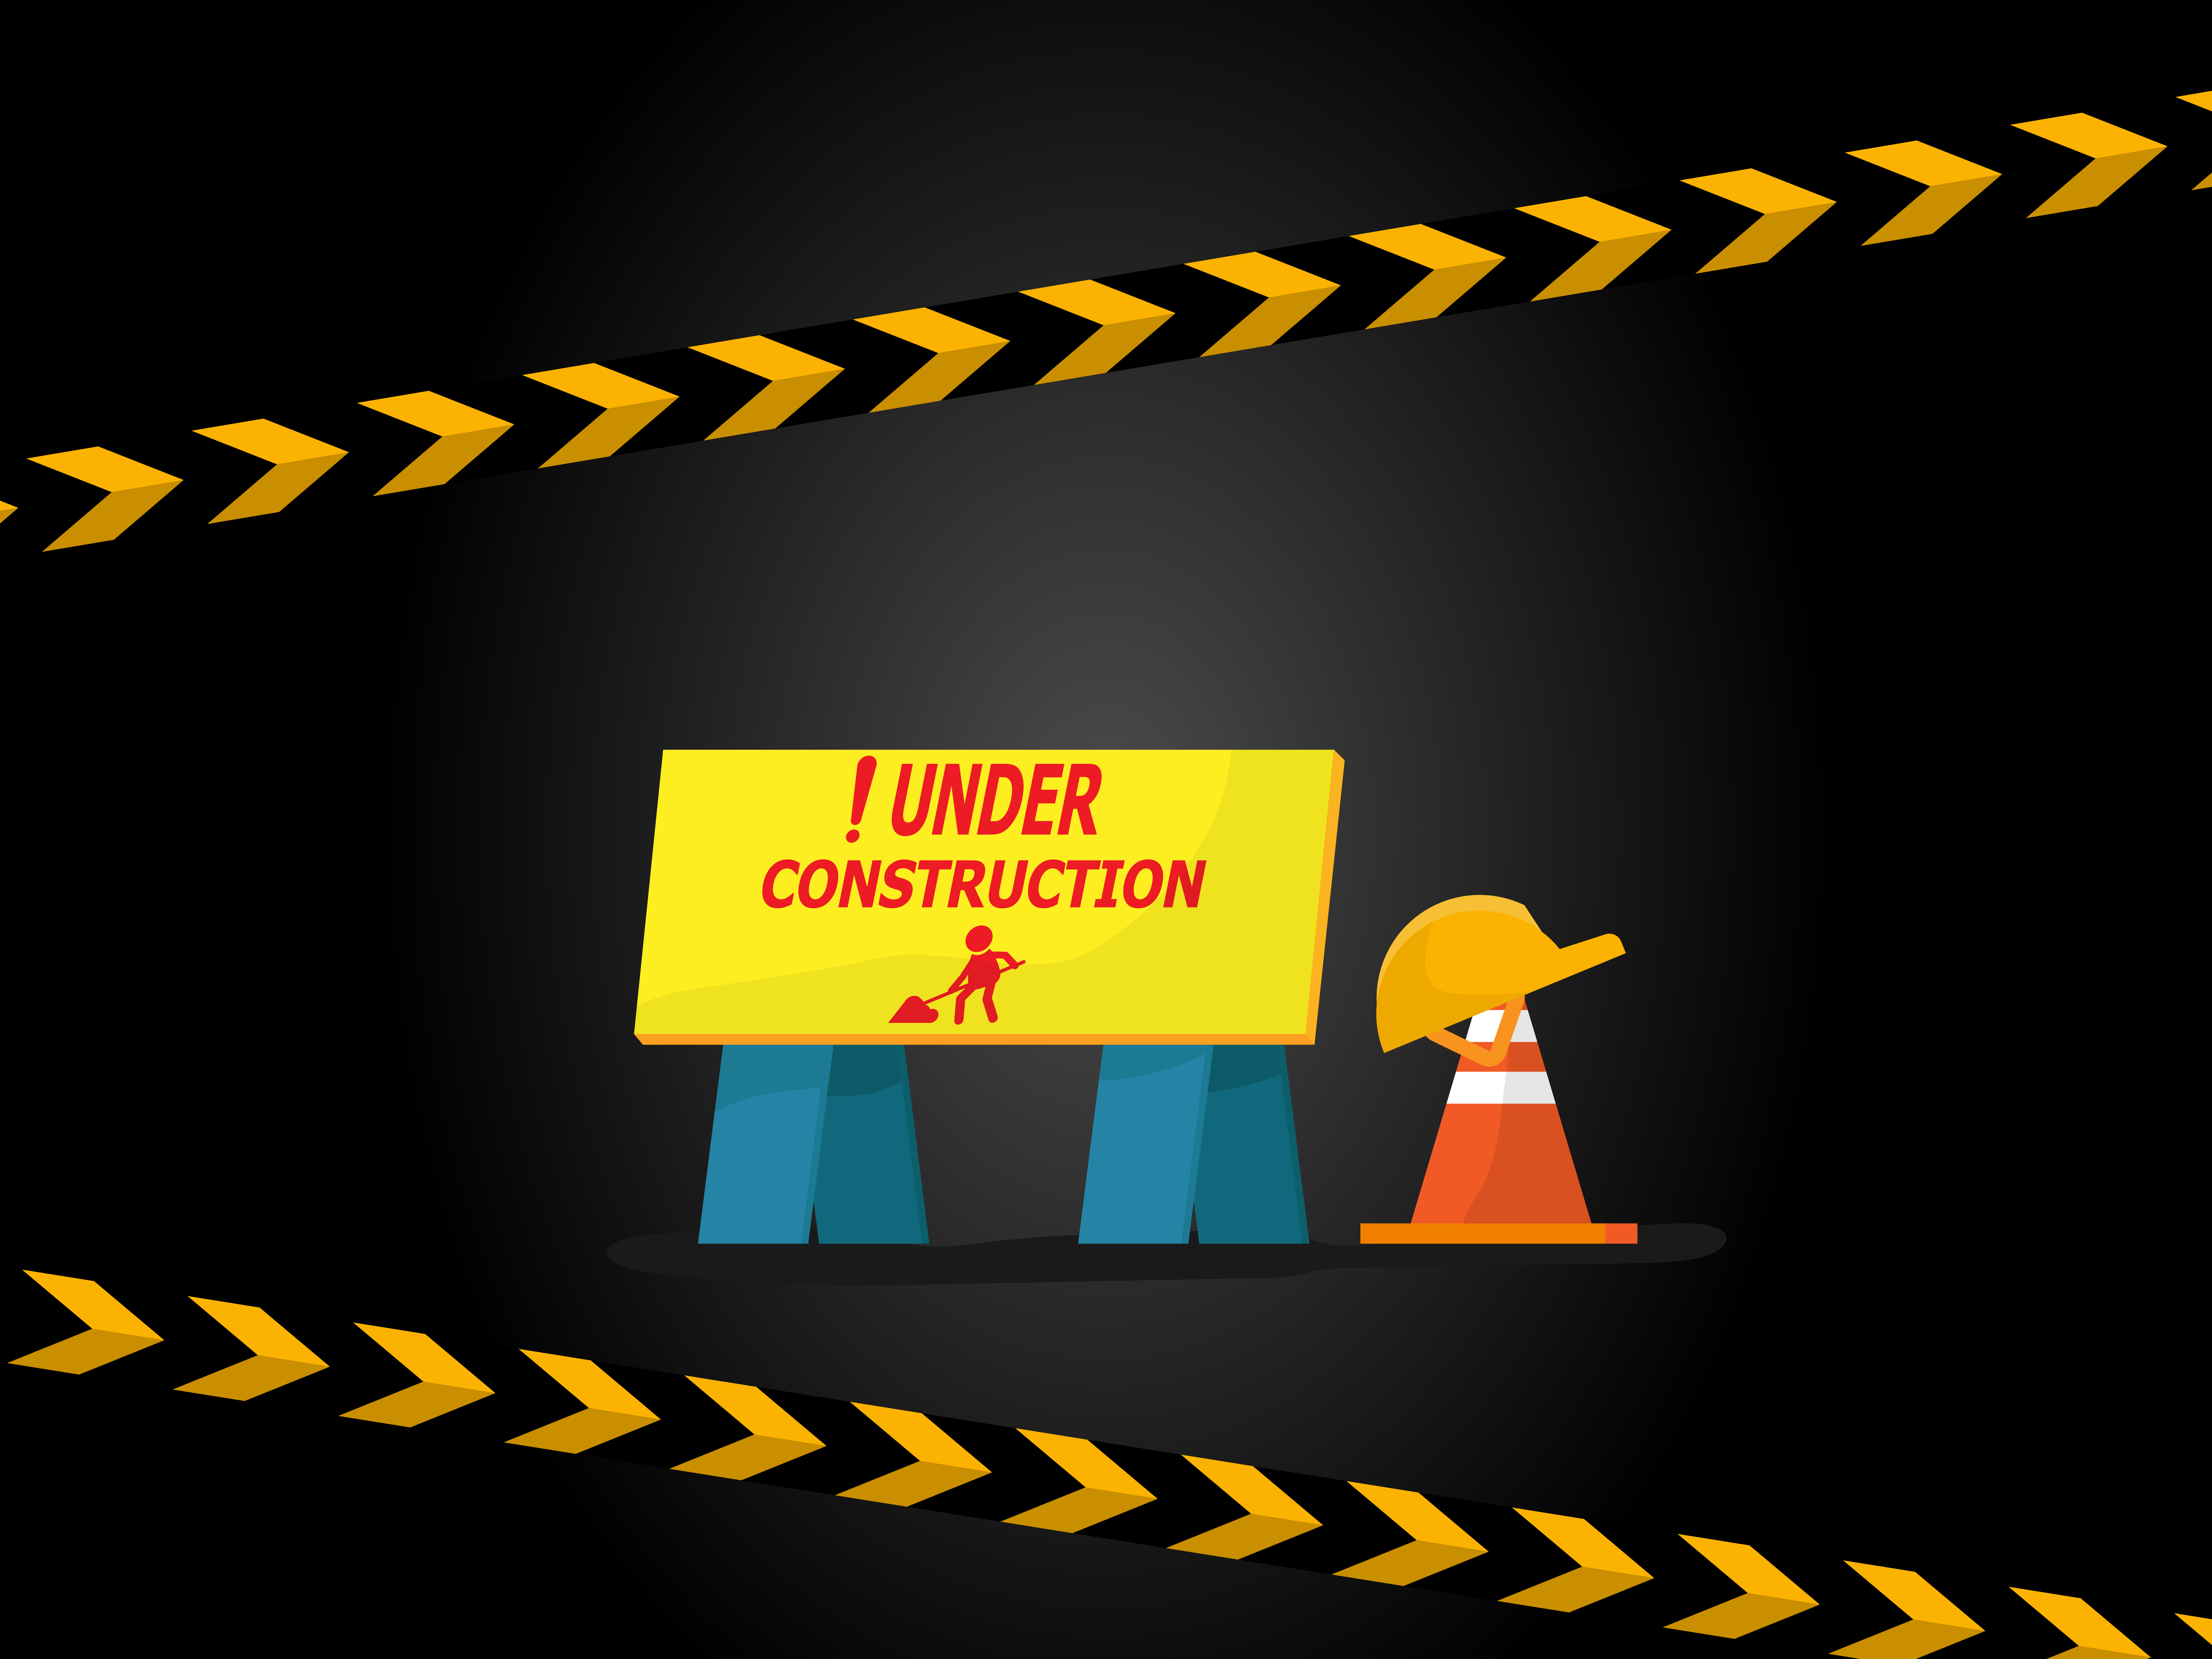  under  construction  label Download Free Vectors Clipart  